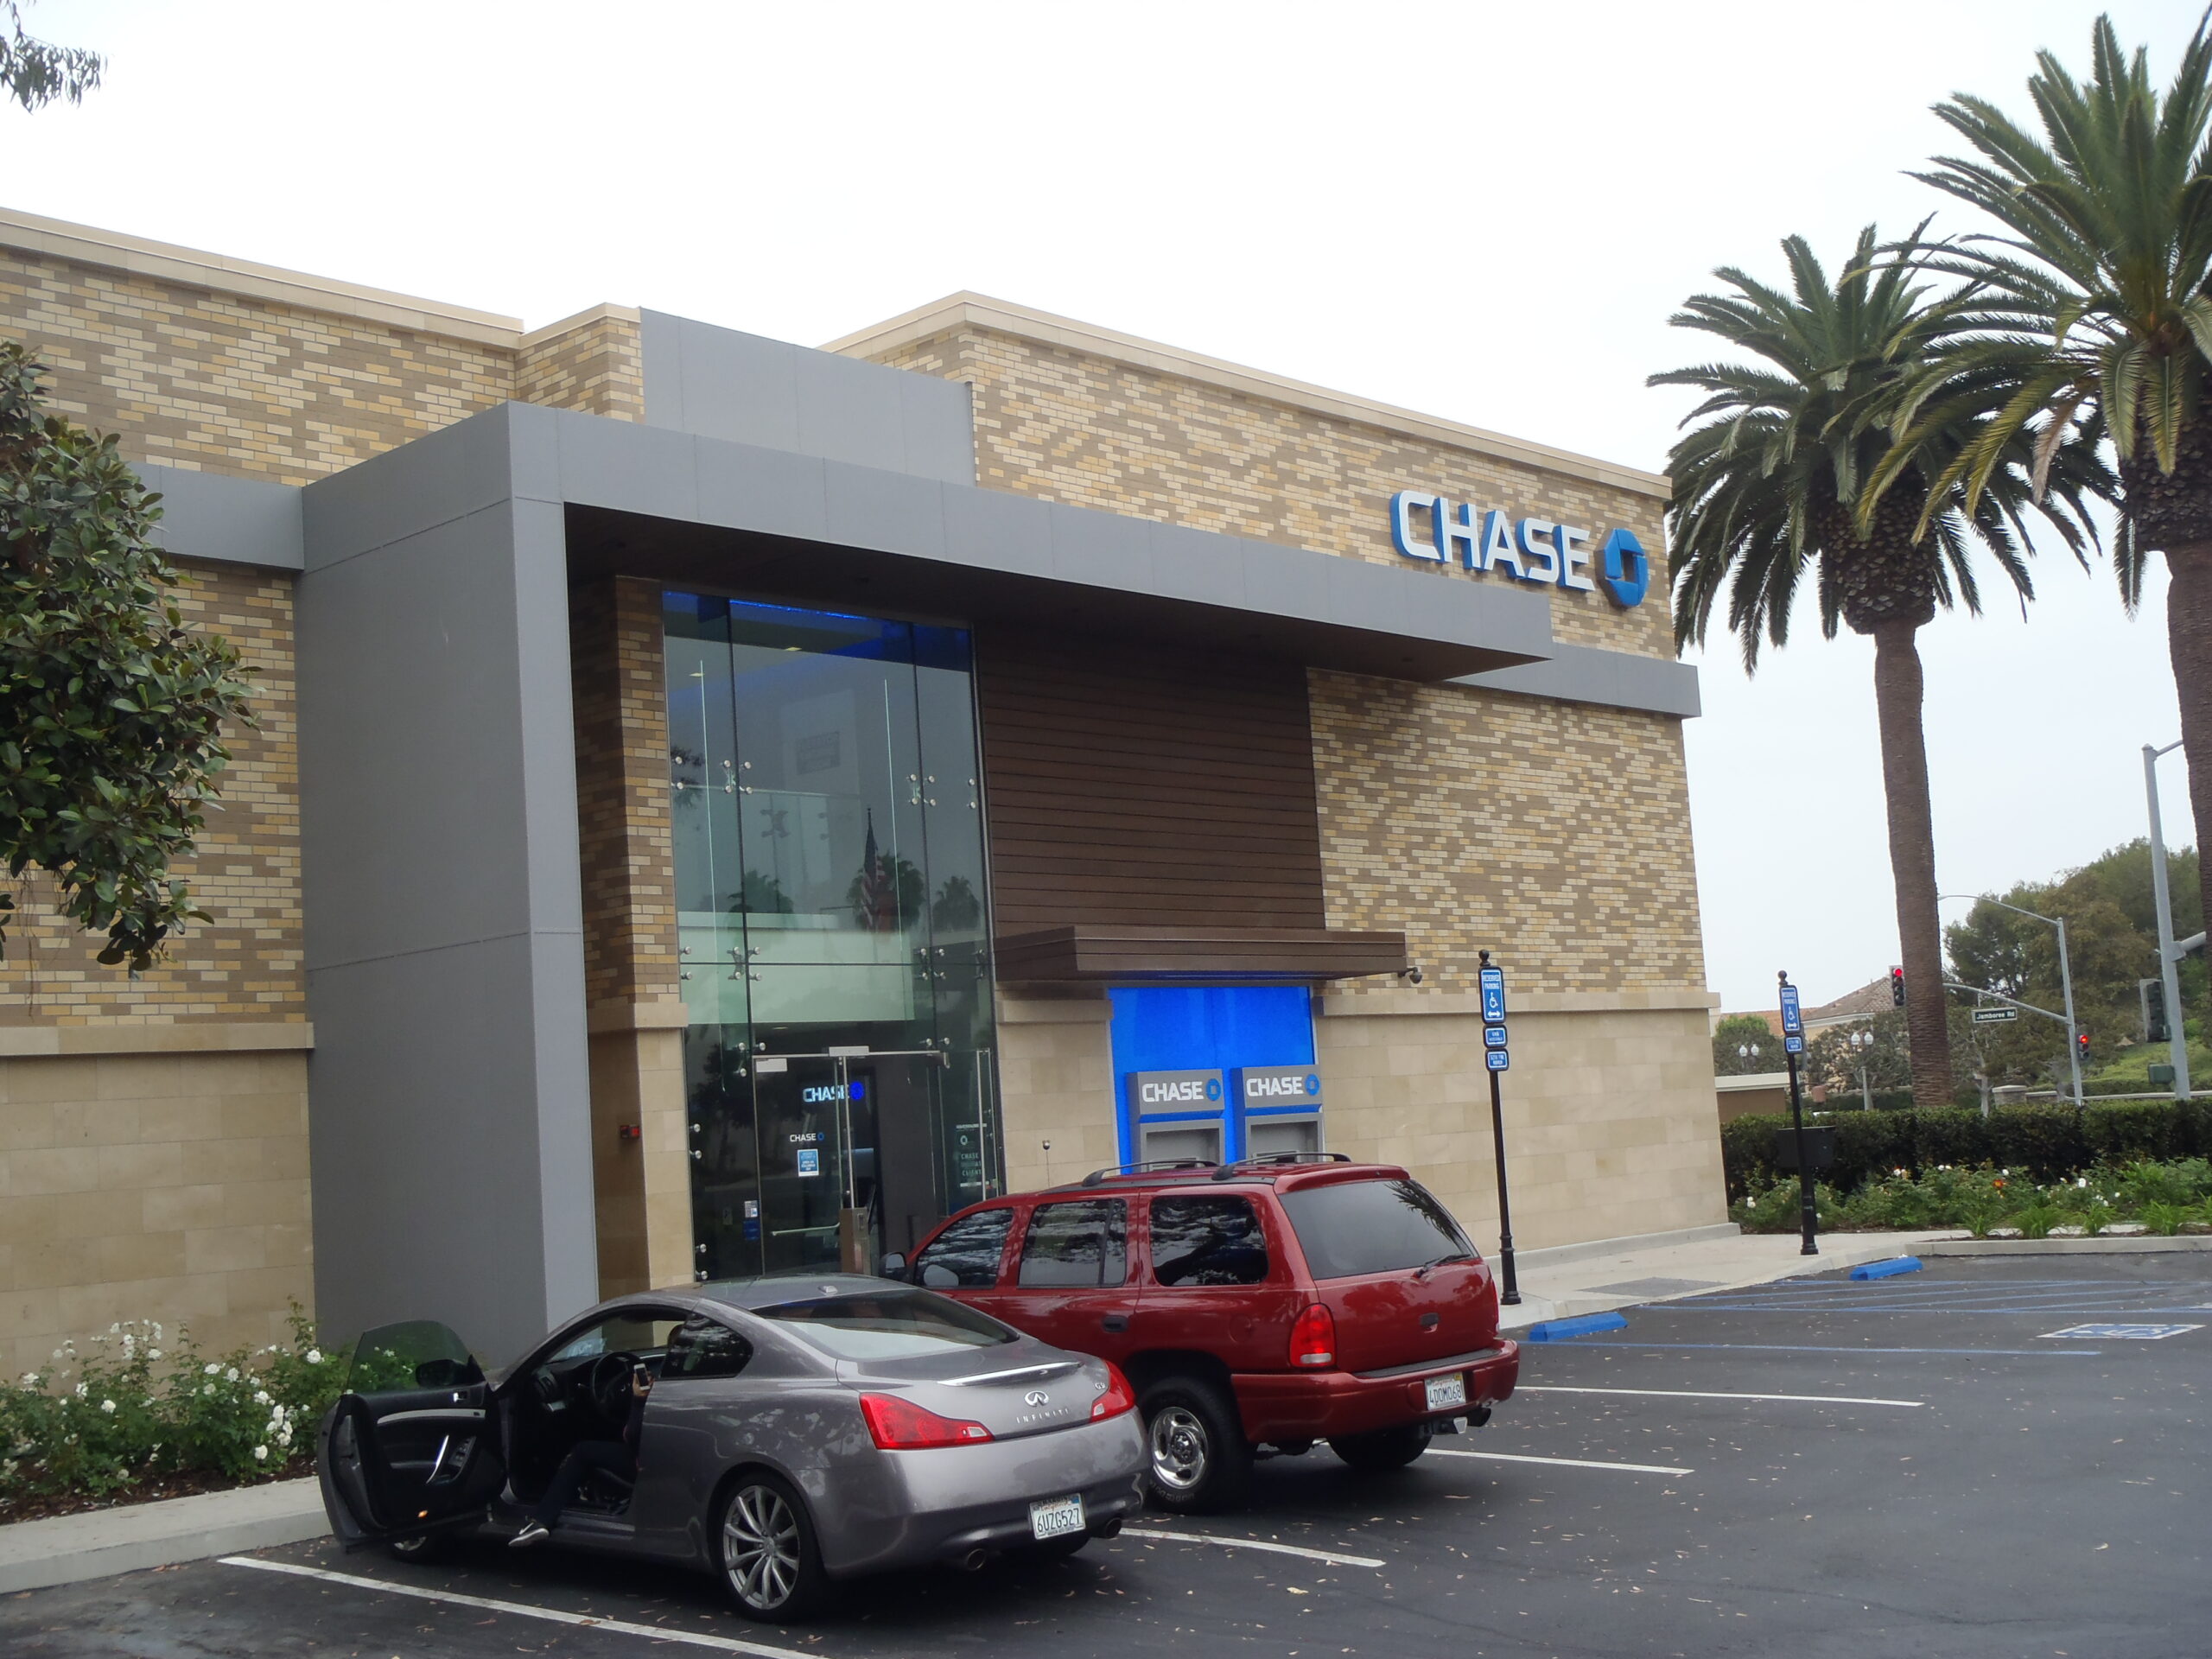 Chase Bank Newport Beach CA 19 scaled